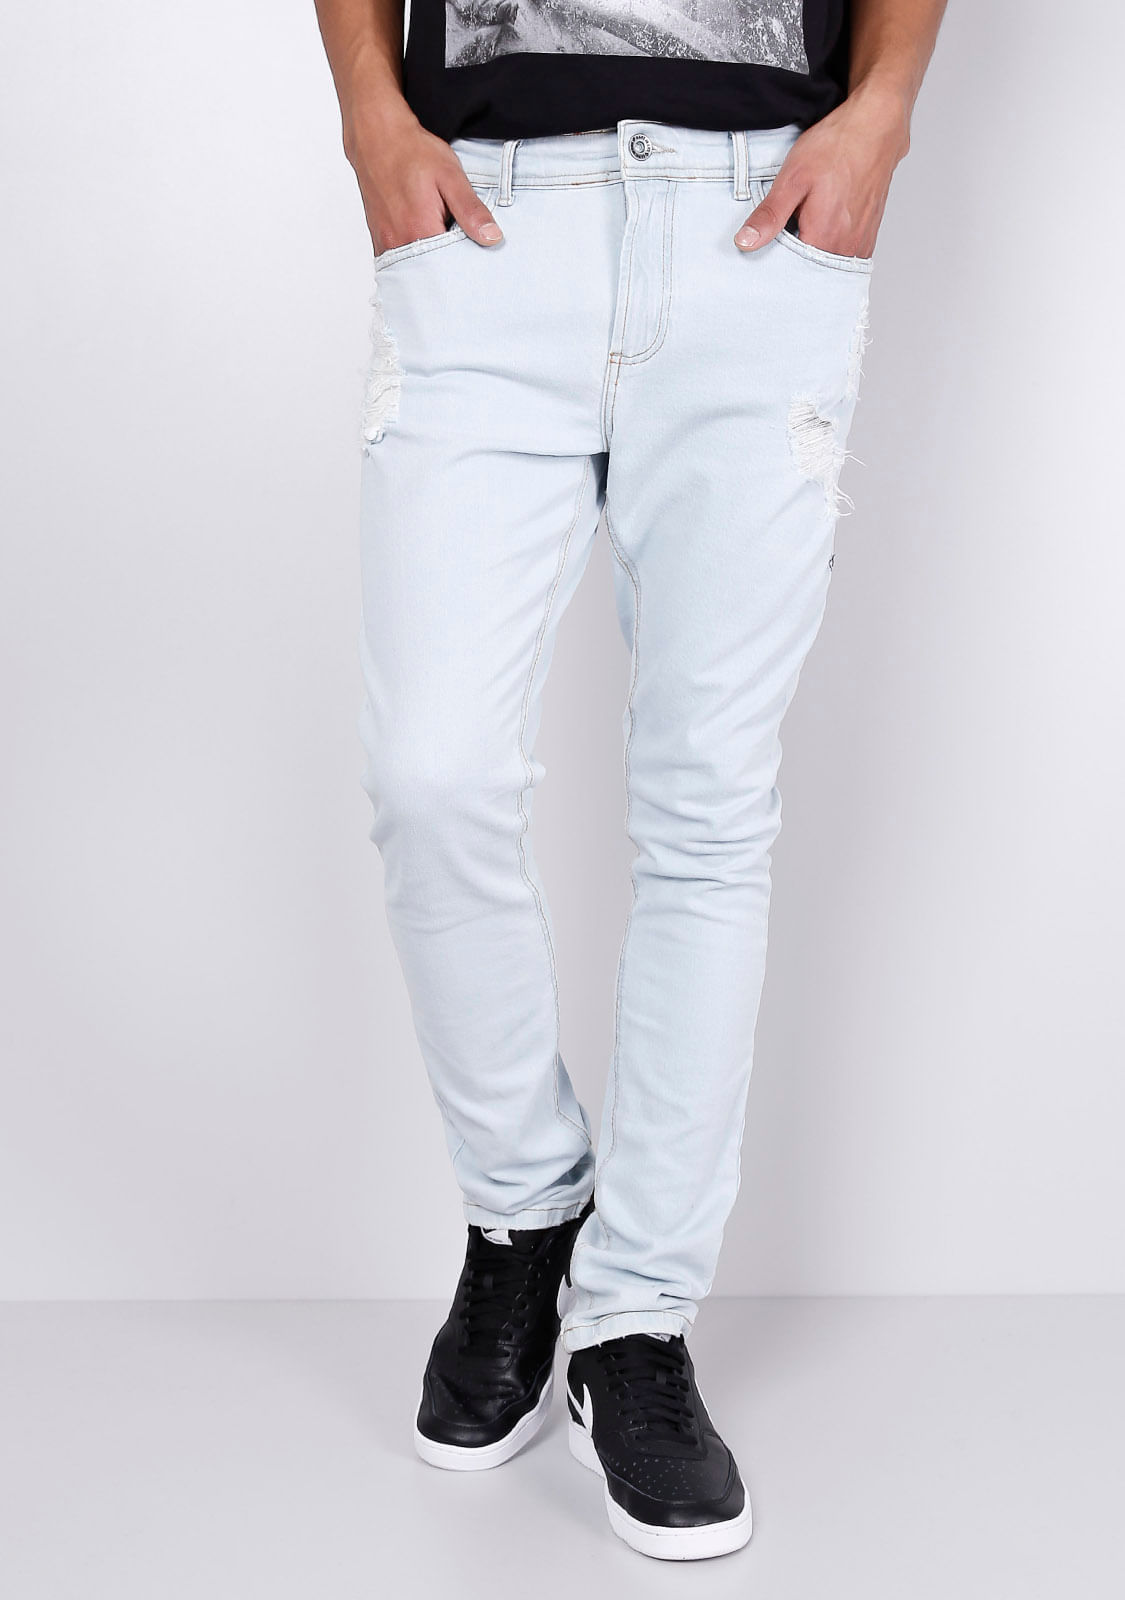 calça jeans azul claro masculina